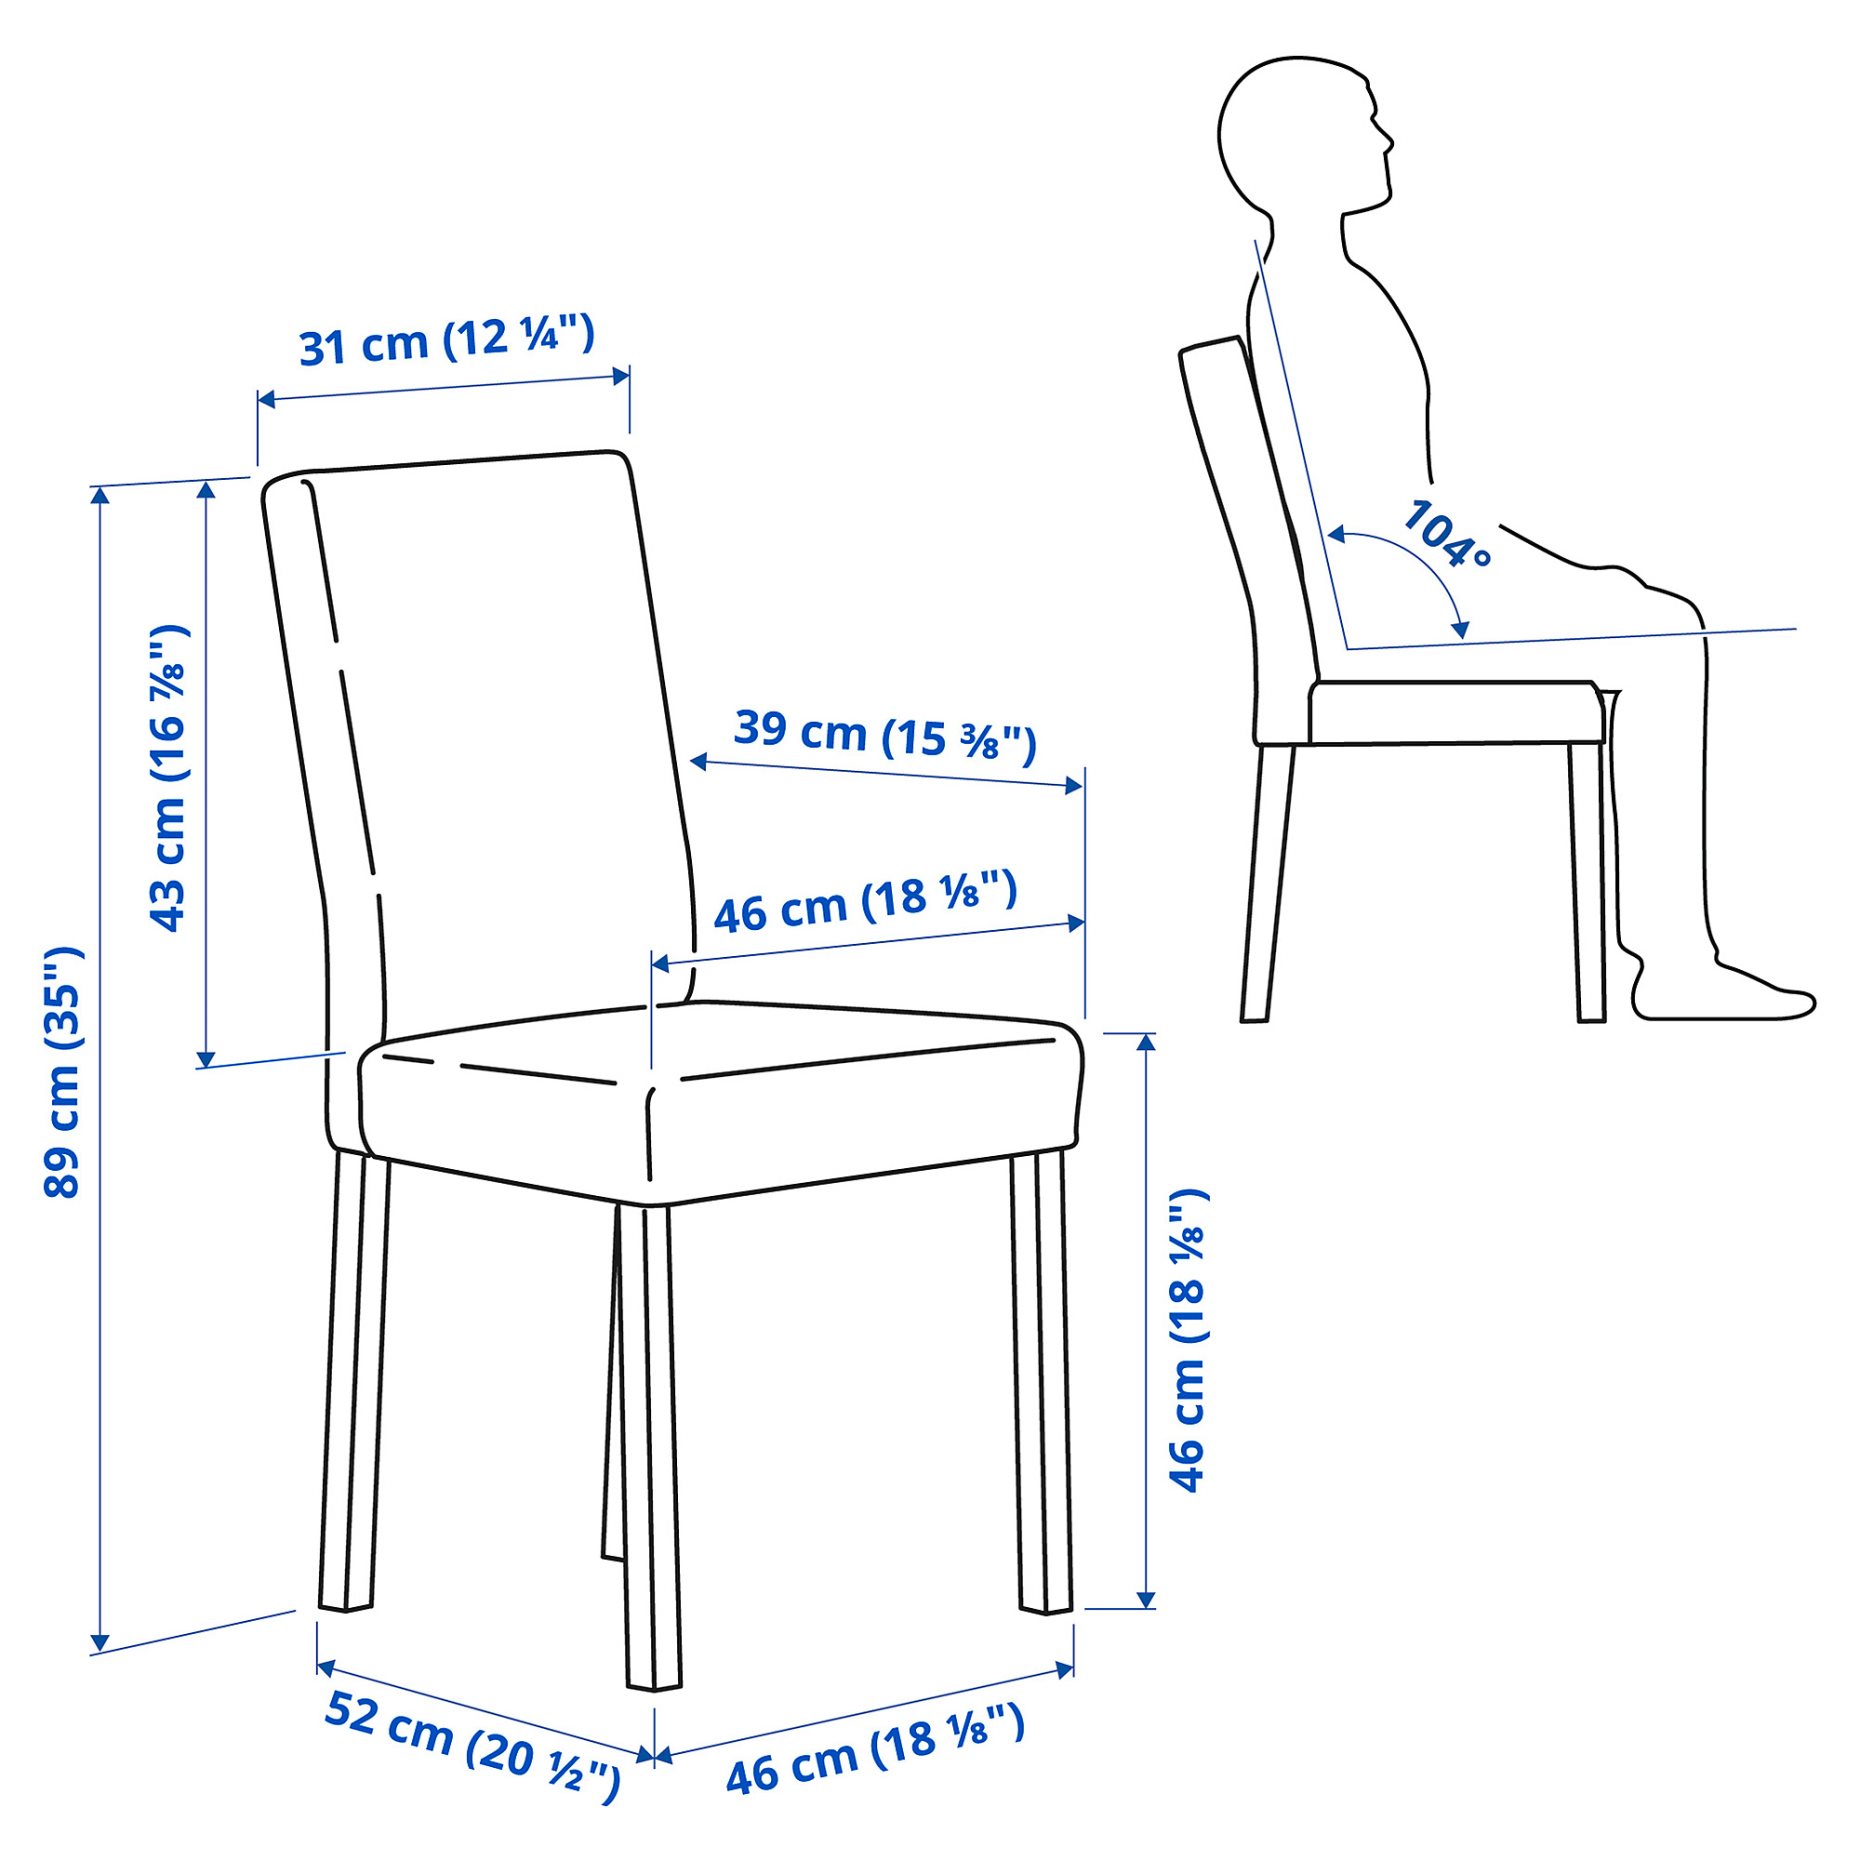 VANGSTA/KATTIL, τραπέζι και 2 καρέκλες, 80/120 cm, 894.287.58